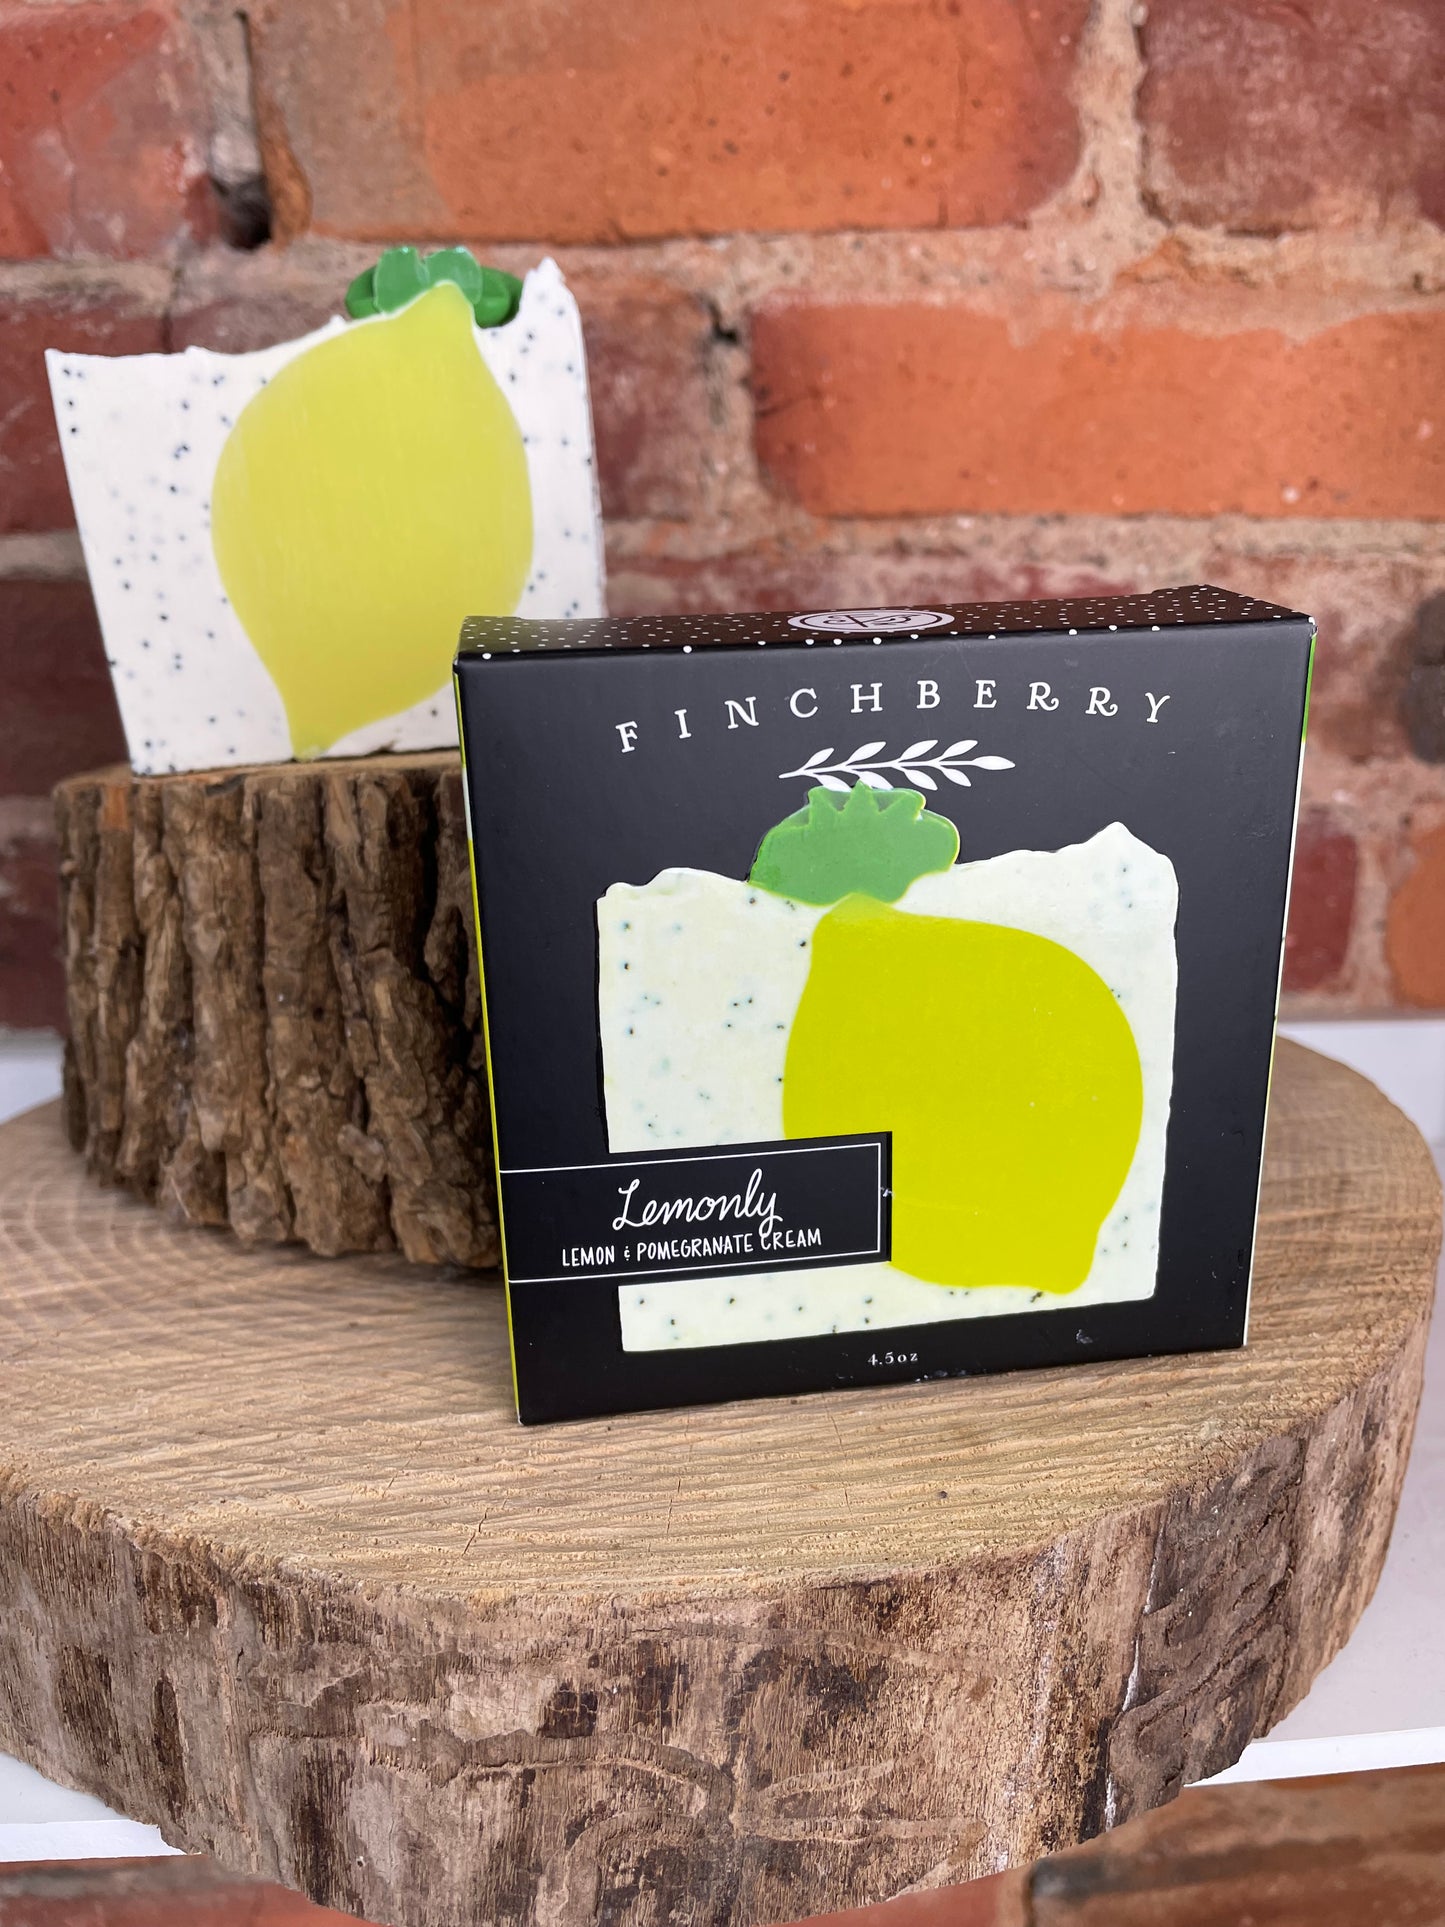 FinchBerry Soap Lemonly